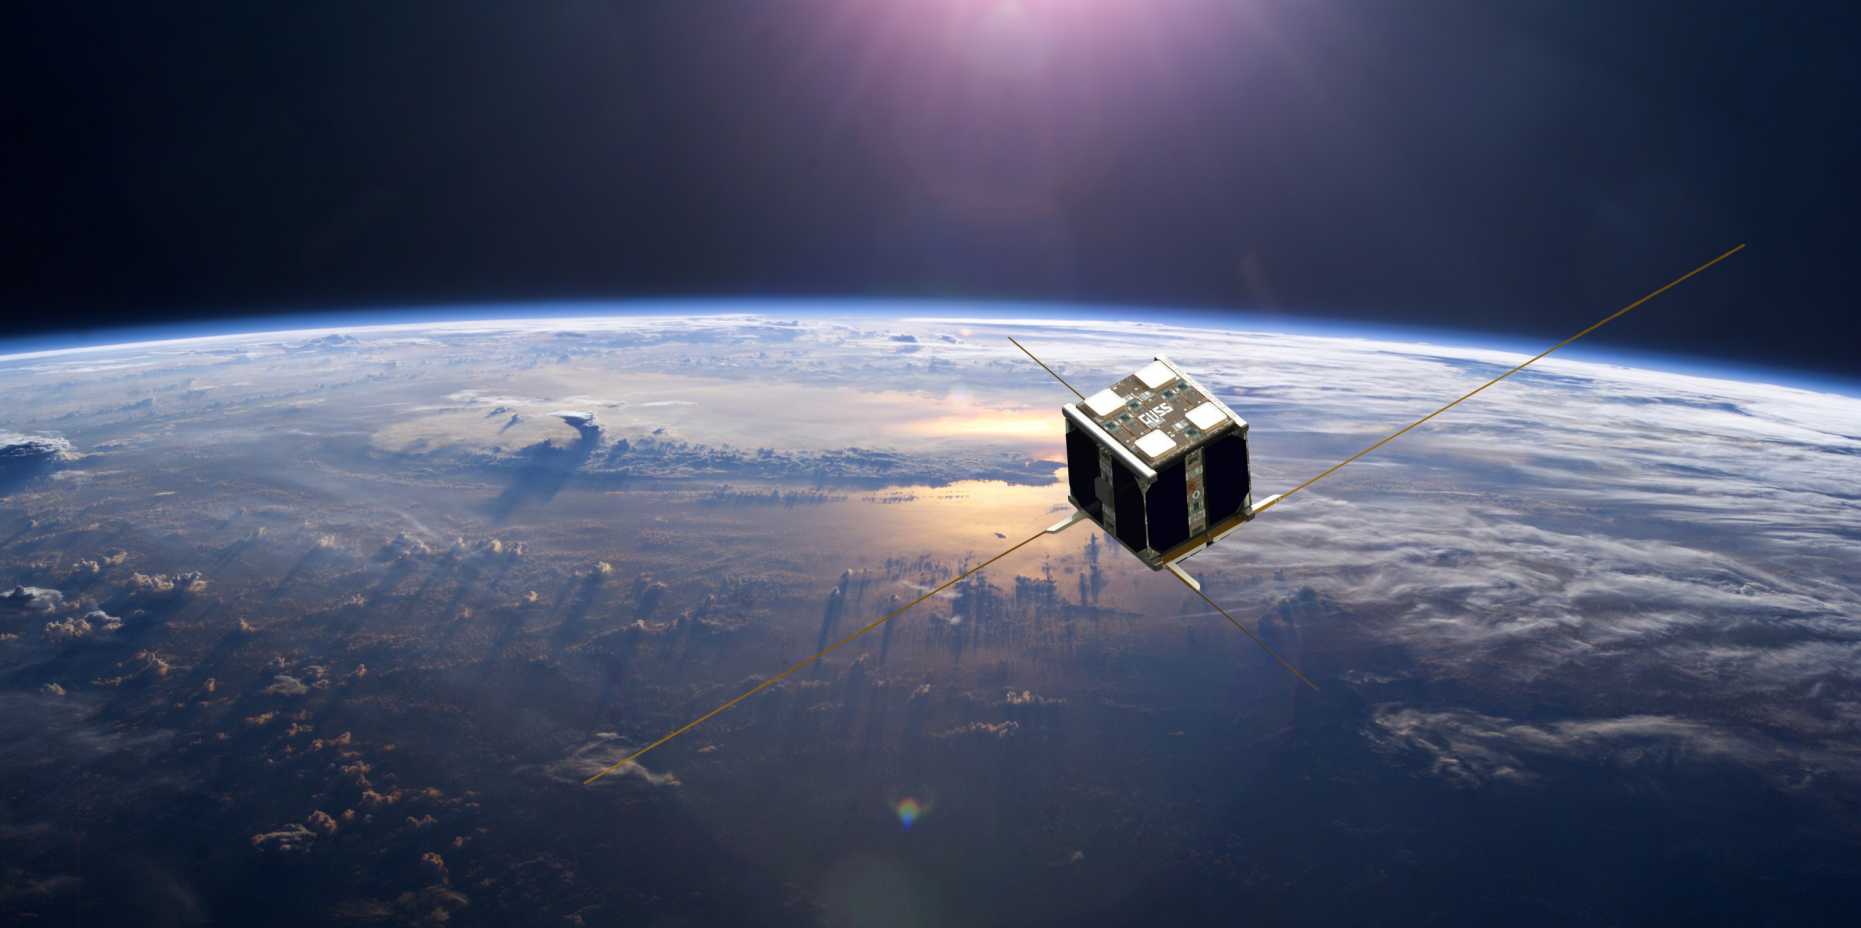 Enlarged view: CubeSat in Space